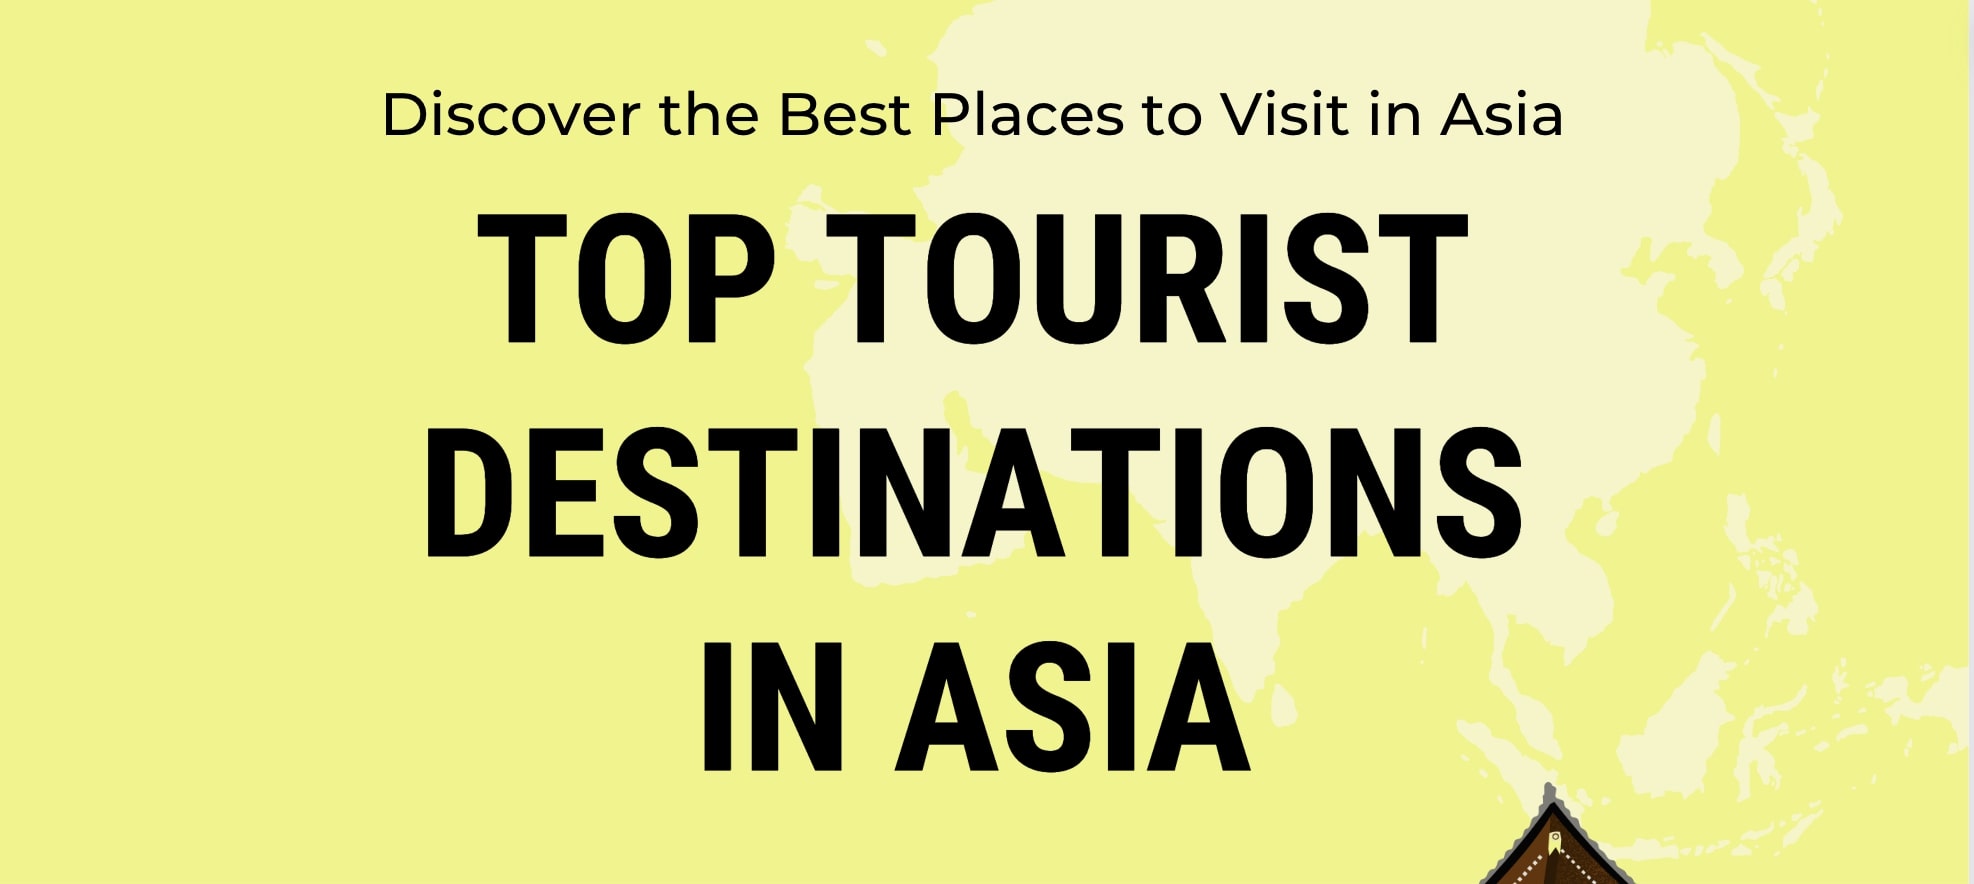 Top Tourist Destinations in Asia feature